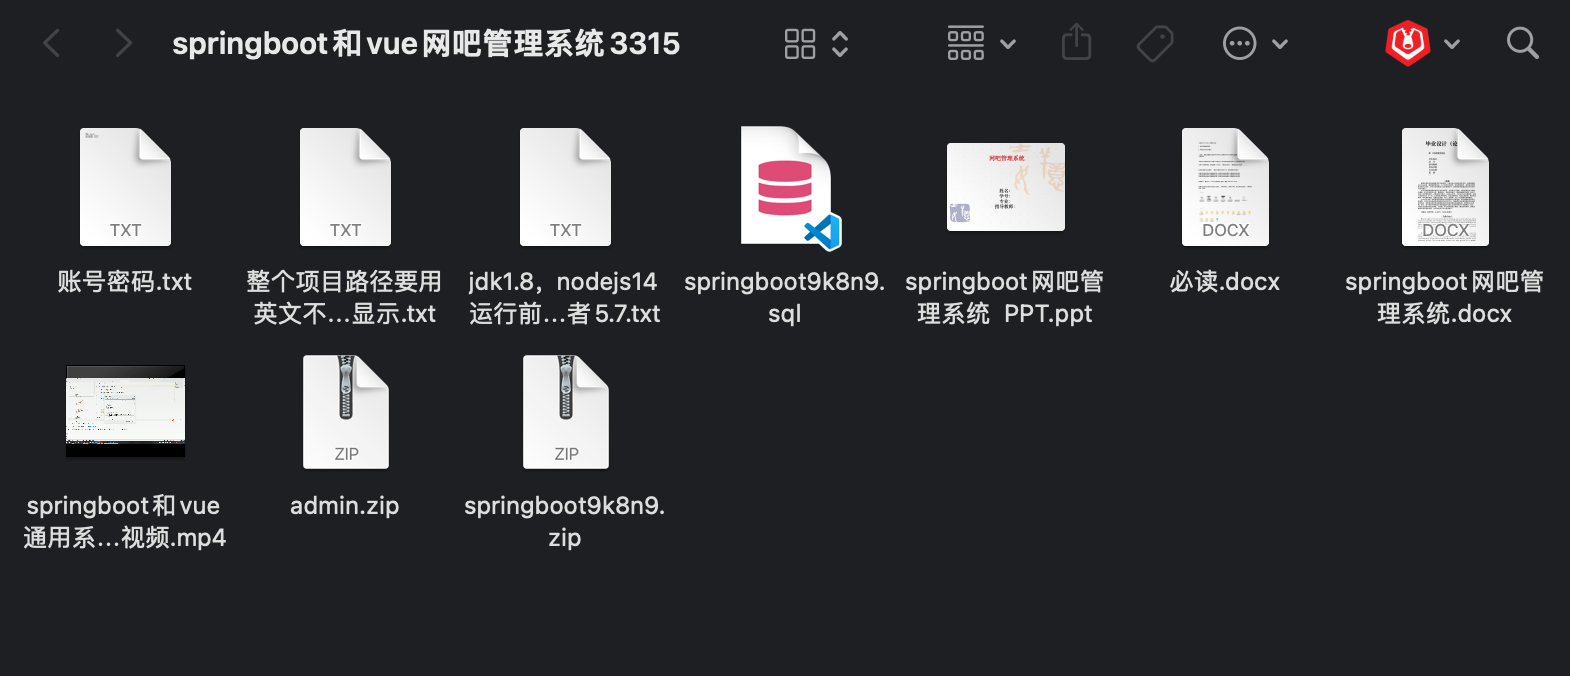 springboot vue网吧管理系统分离java源码部署视频文档ppt - 图0